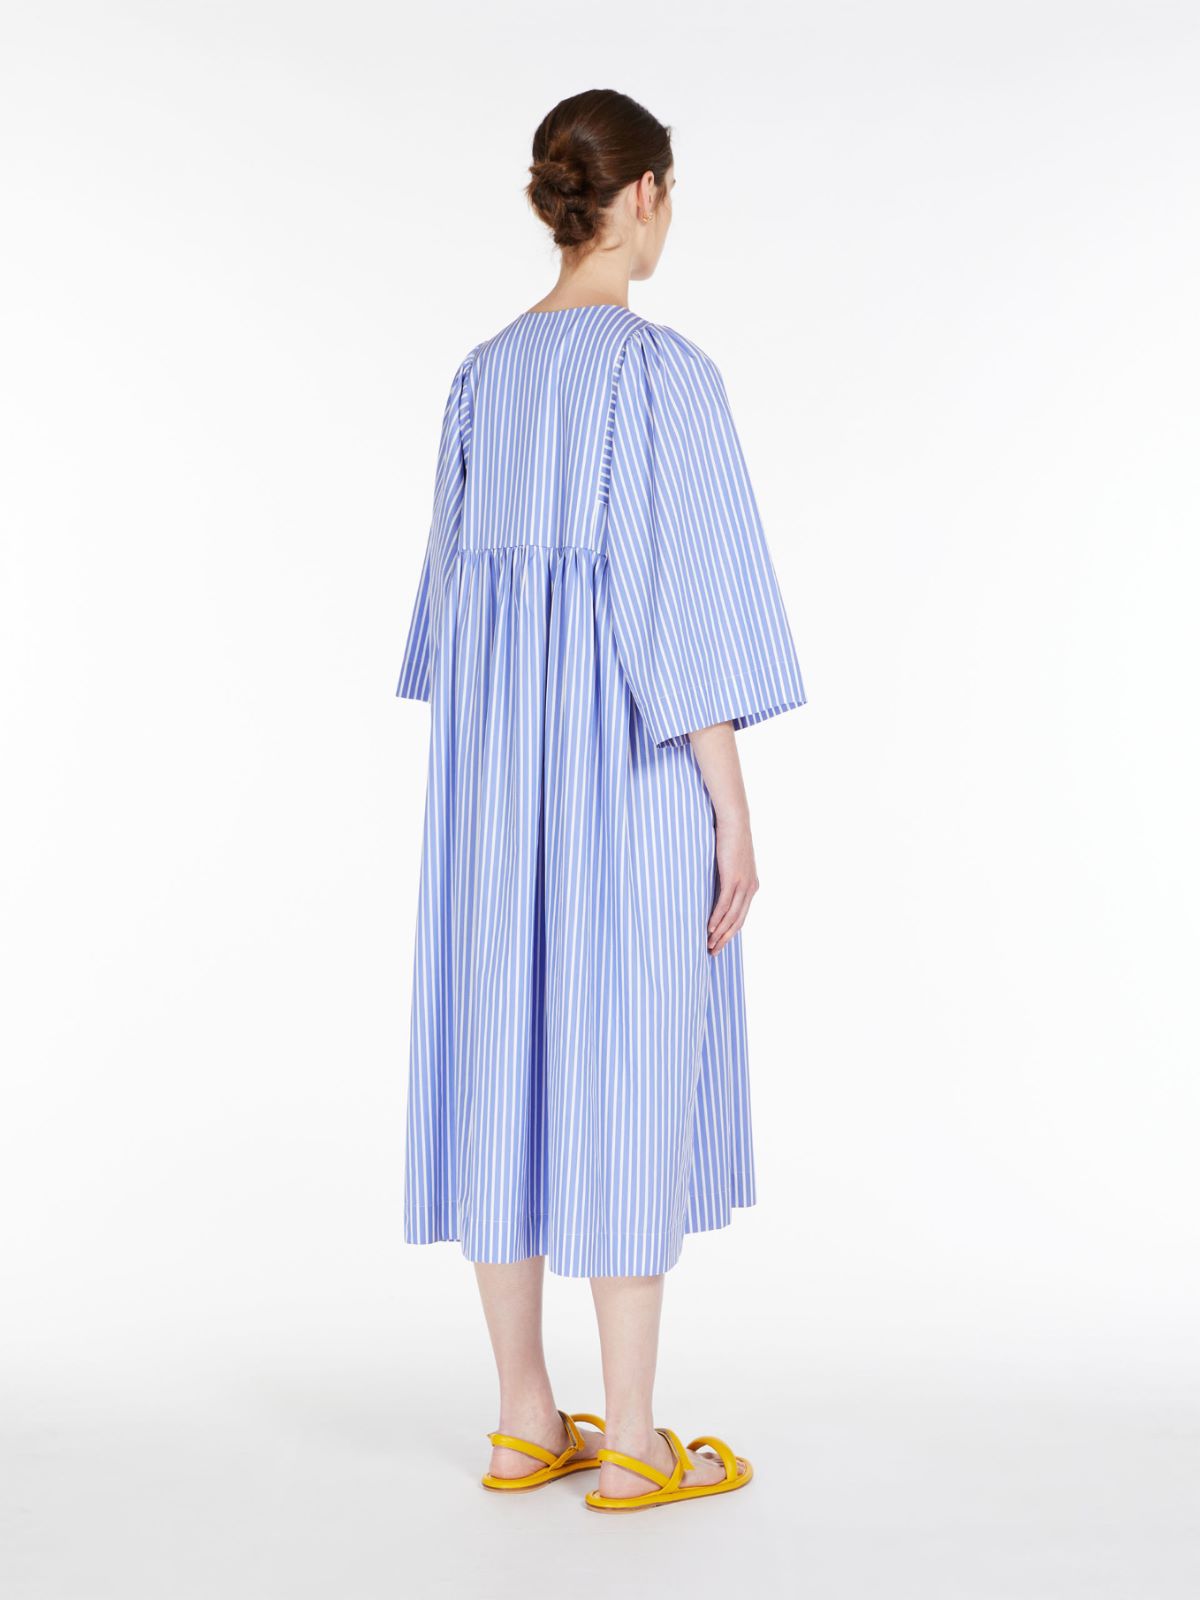 Dress in organic cotton poplin - CORNFLOWER BLUE - Weekend Max Mara - 3